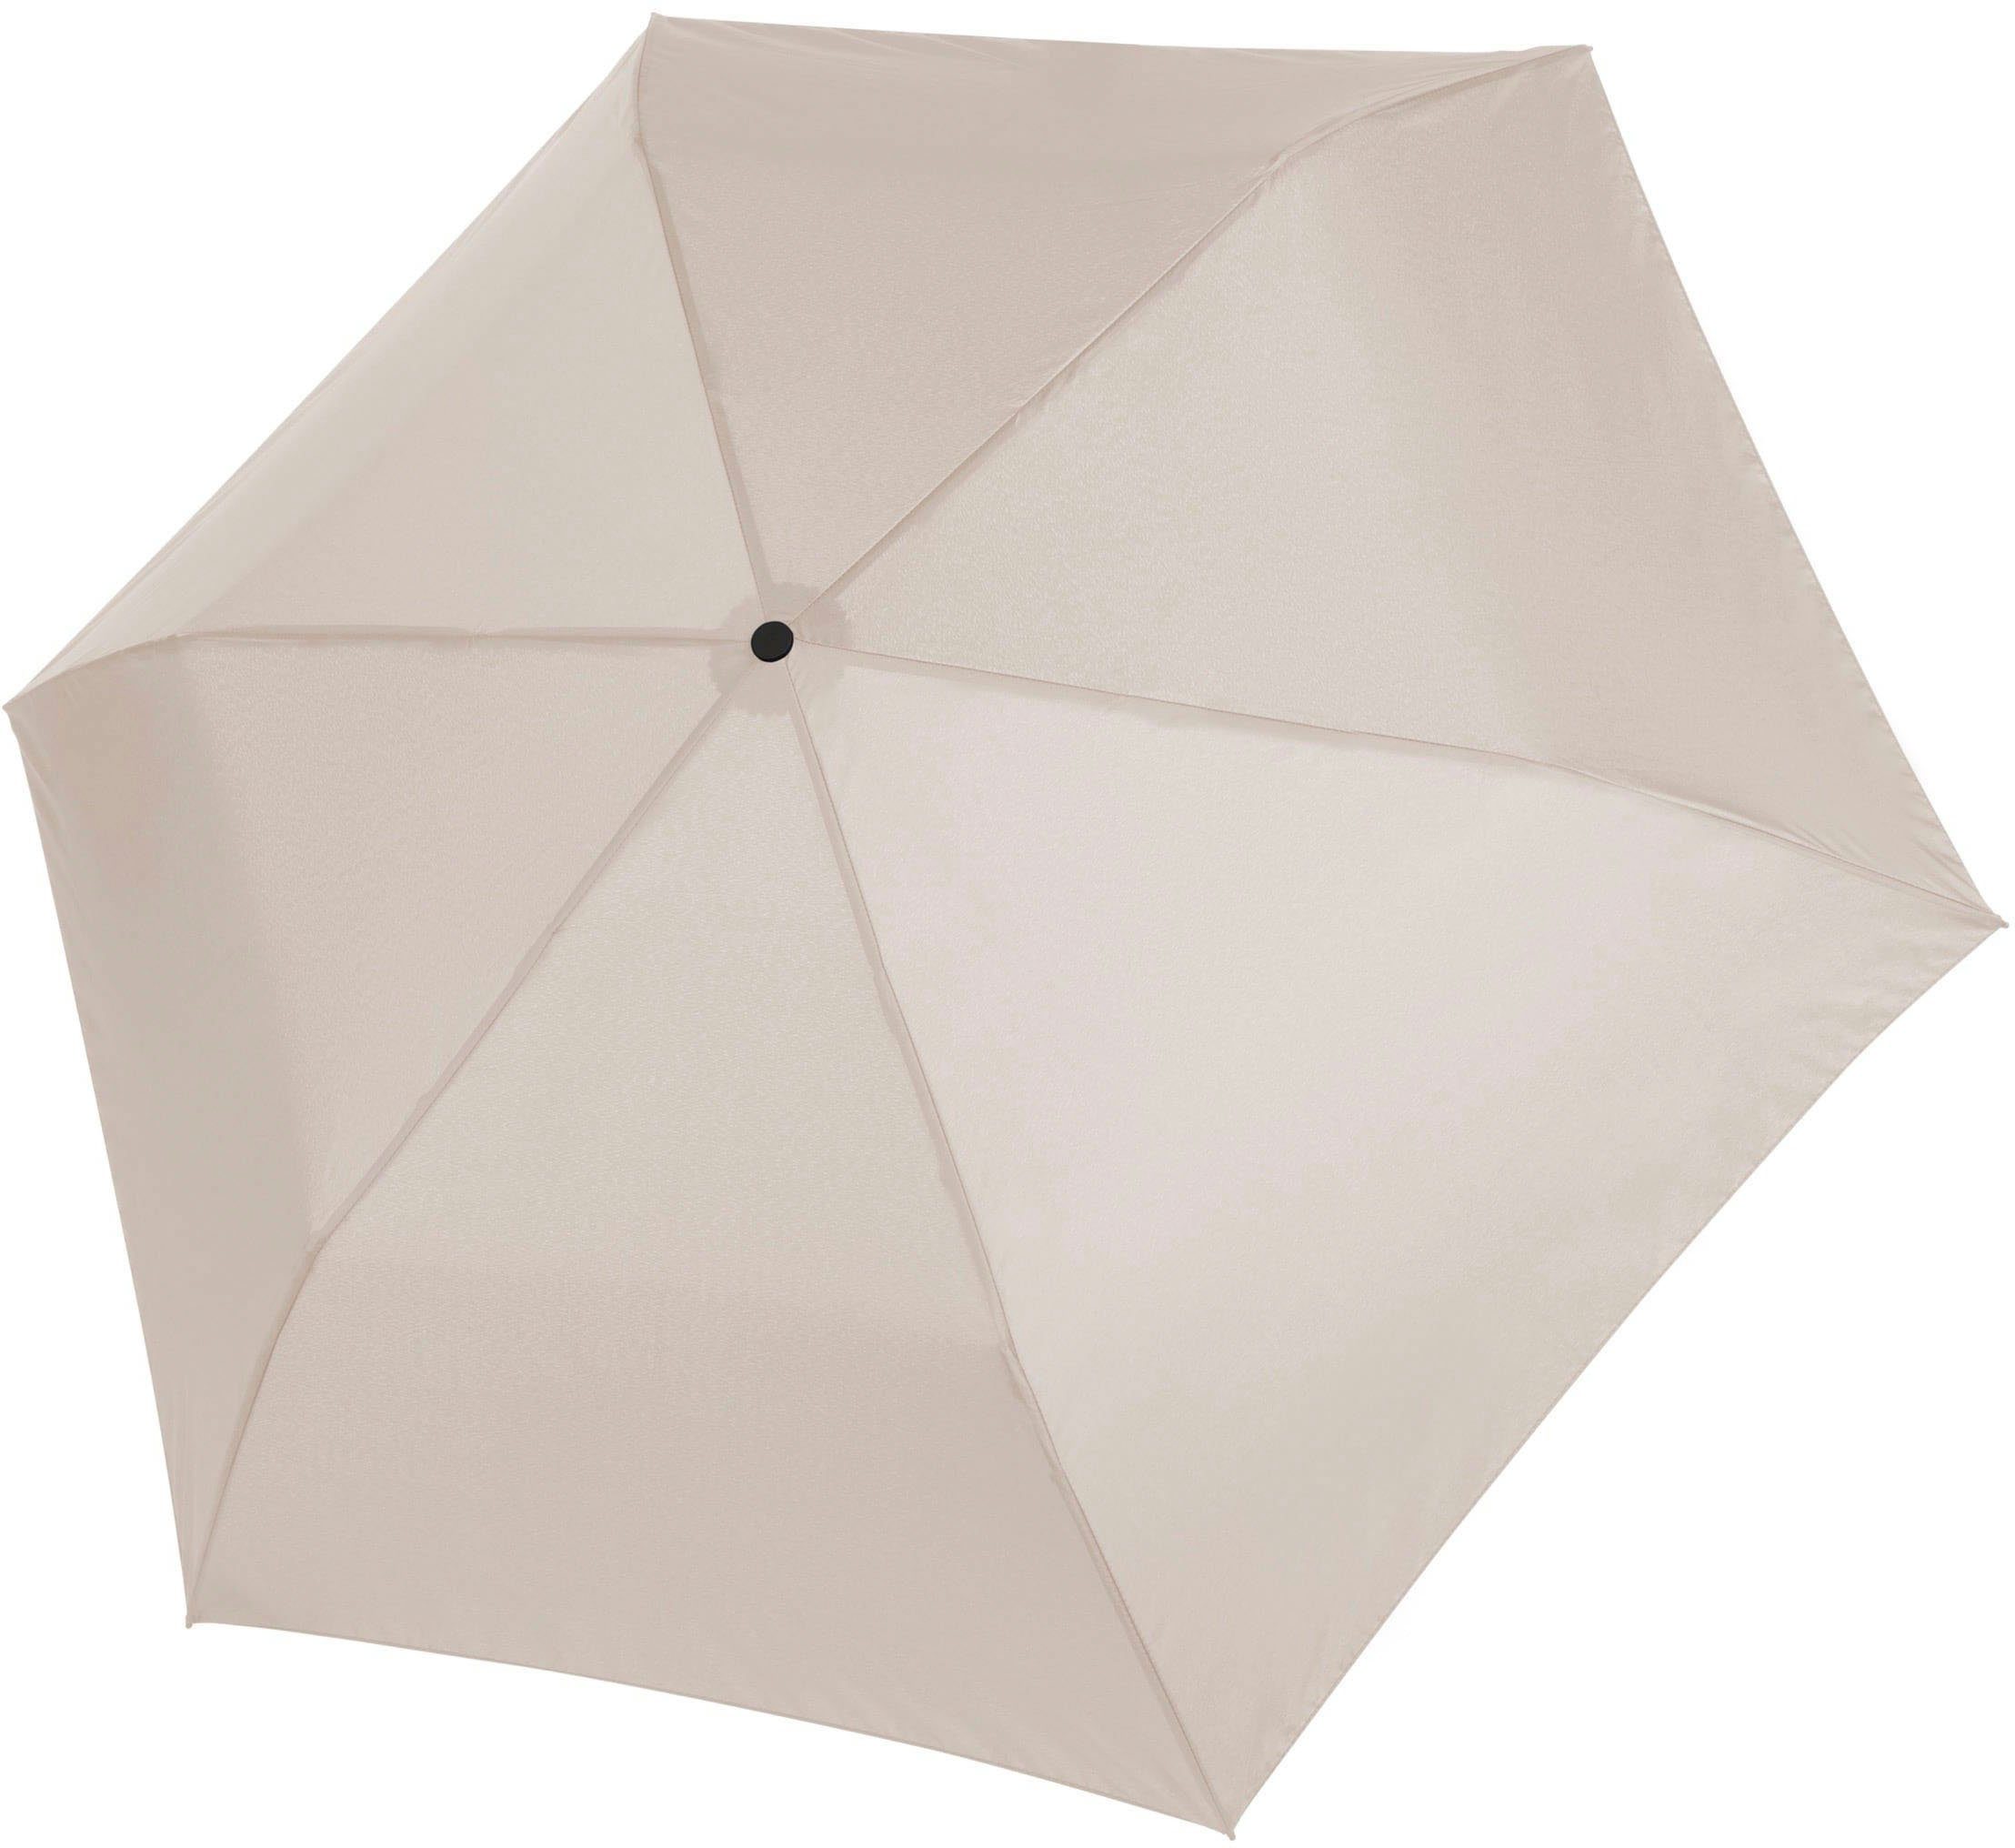 Taschenregenschirm zero beige uni, Magic harmonic doppler®